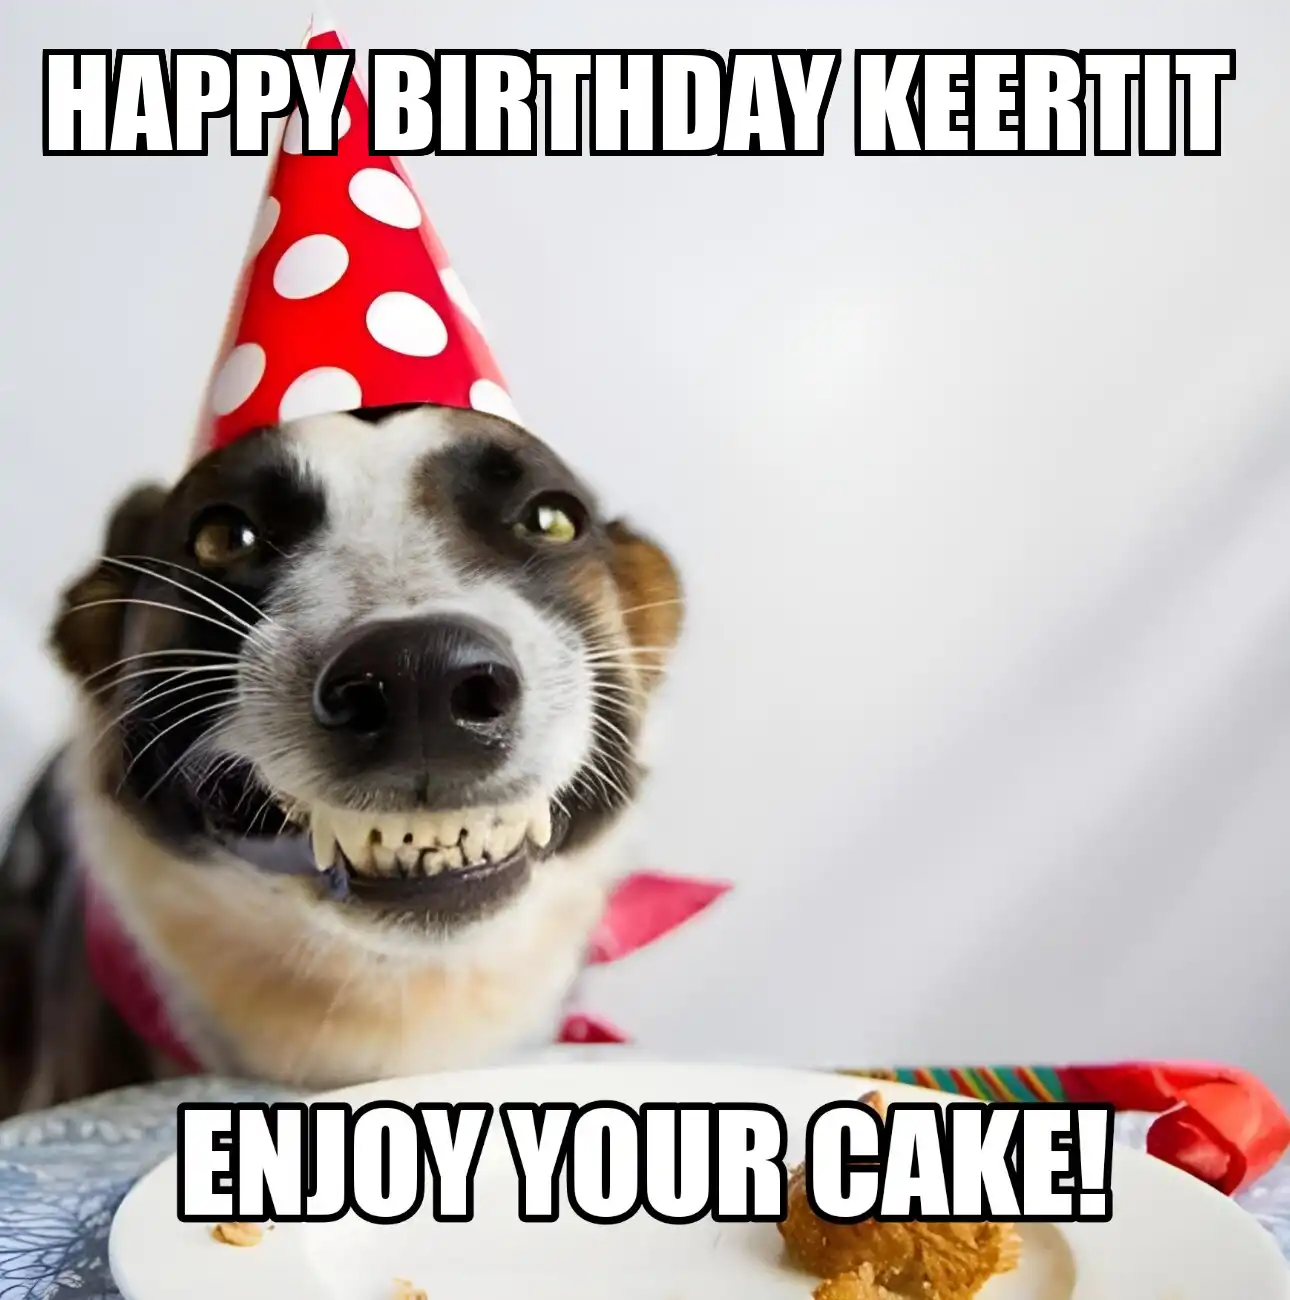 Happy Birthday Keertit Enjoy Your Cake Dog Meme